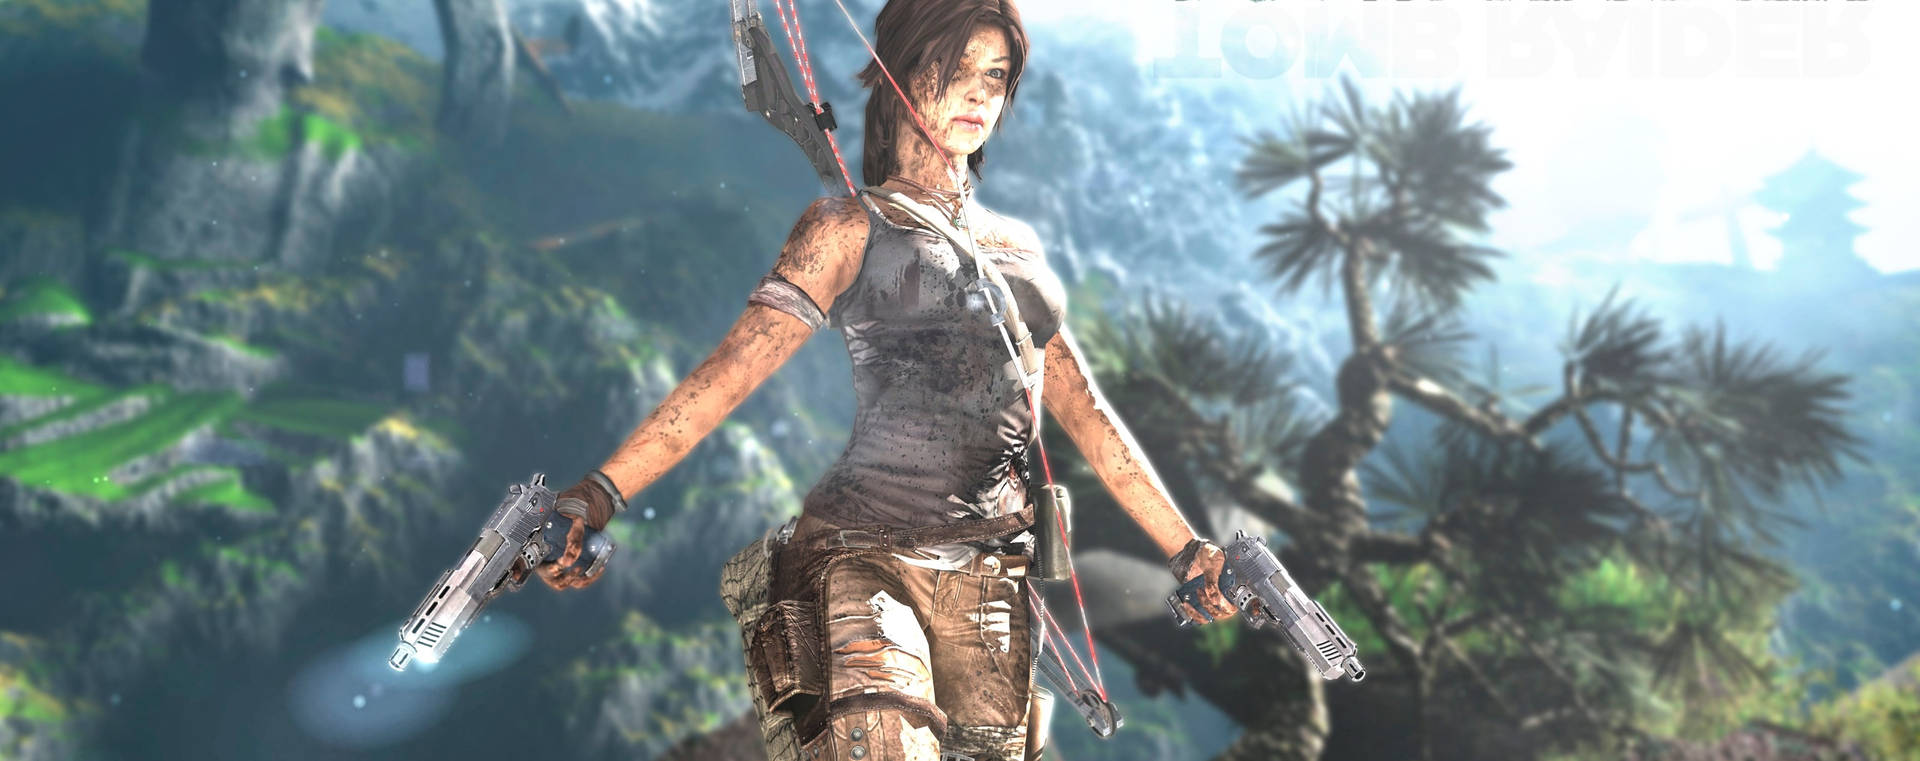 Lara Croft Ready for her Next Adventure Wallpaper